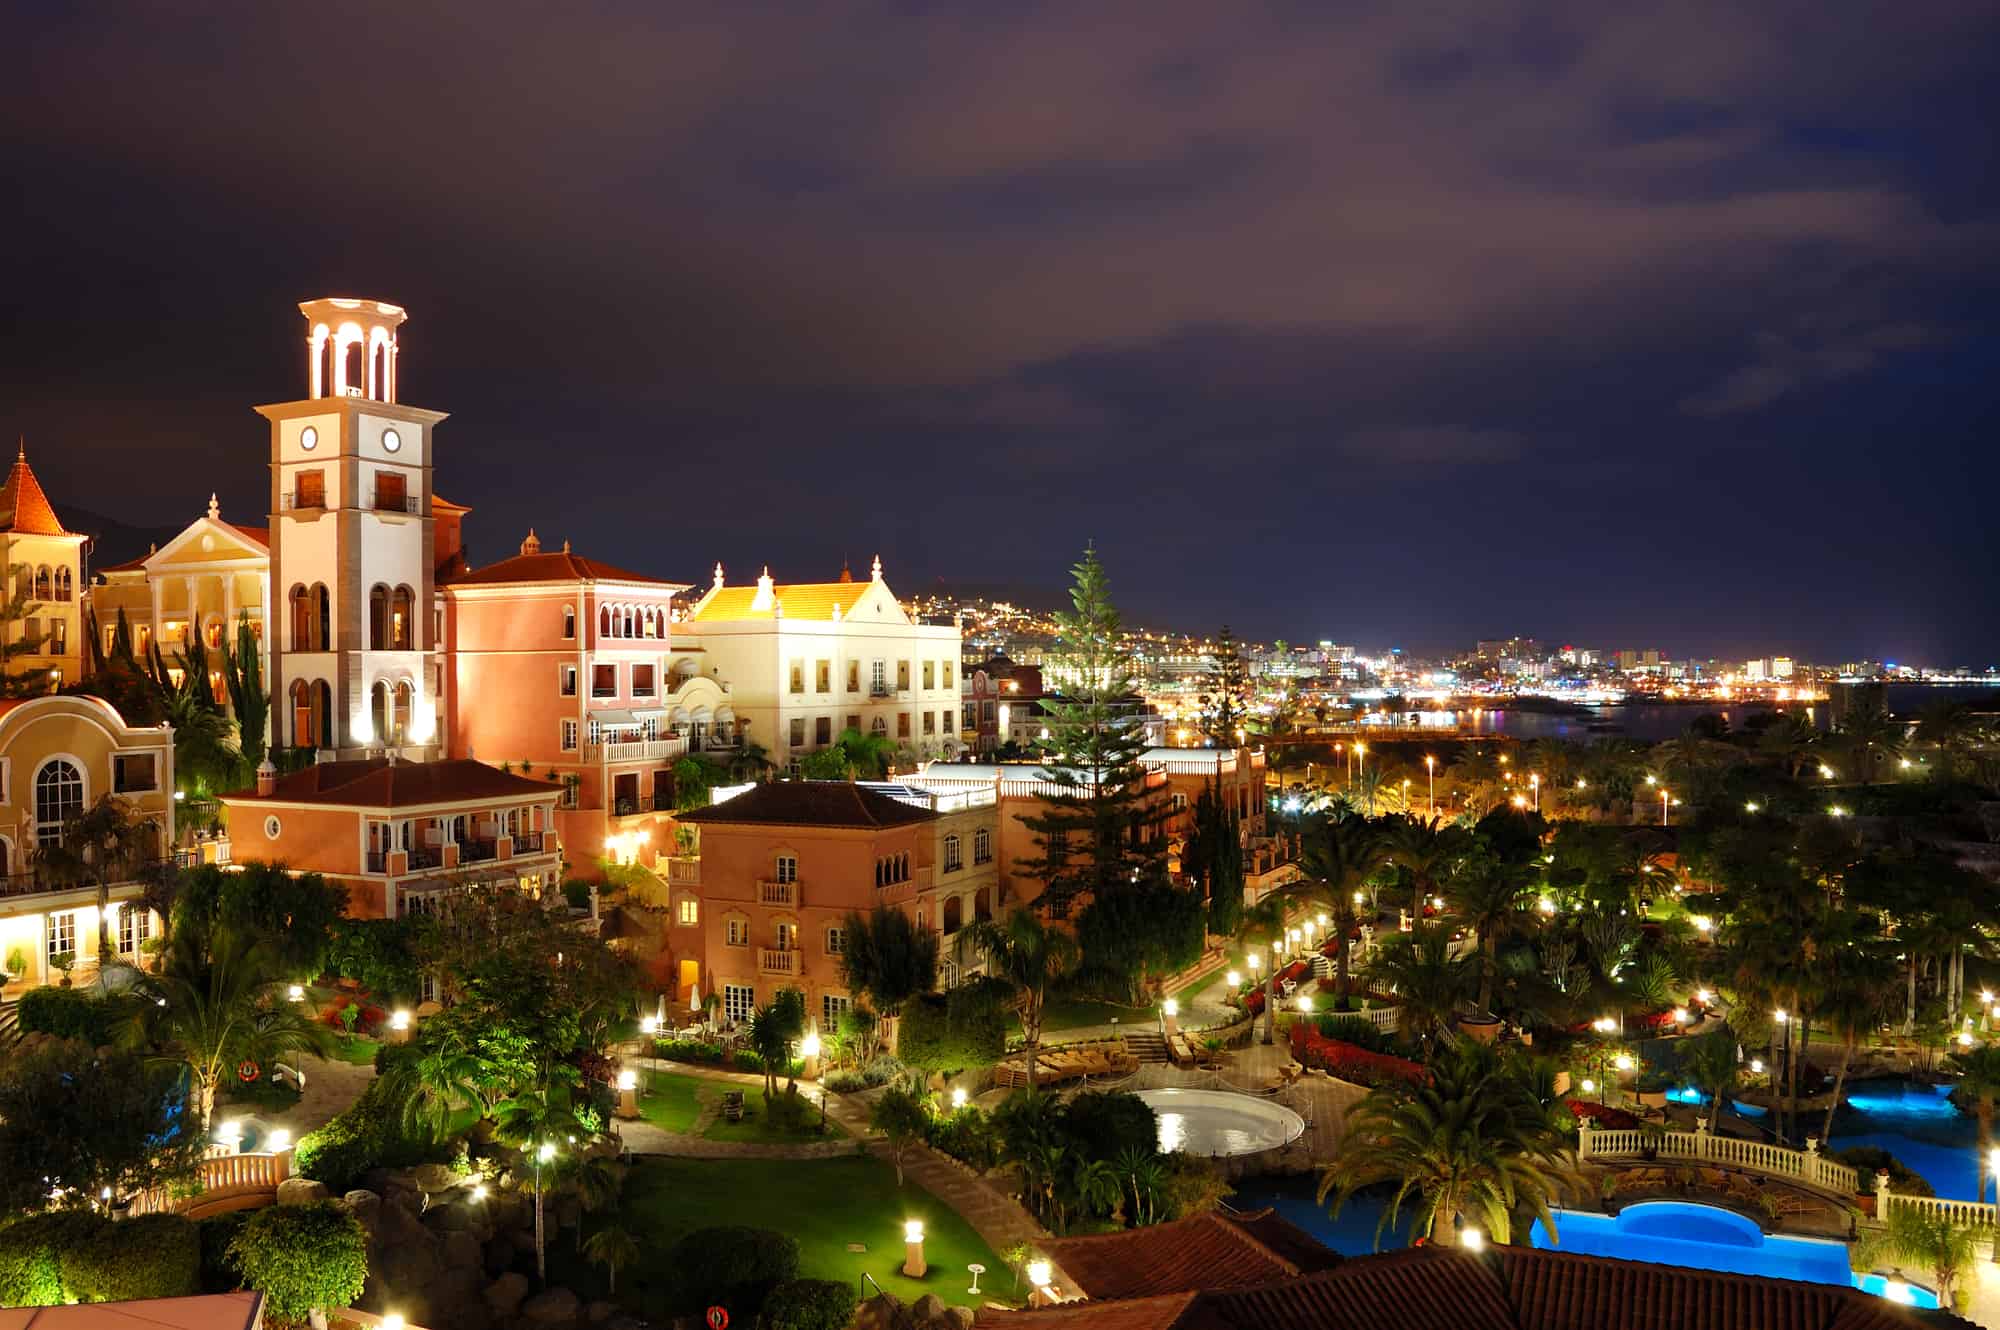 Night illumination of luxury hotel during sunset and Playa de las Americas at background, Tenerife island, Spain